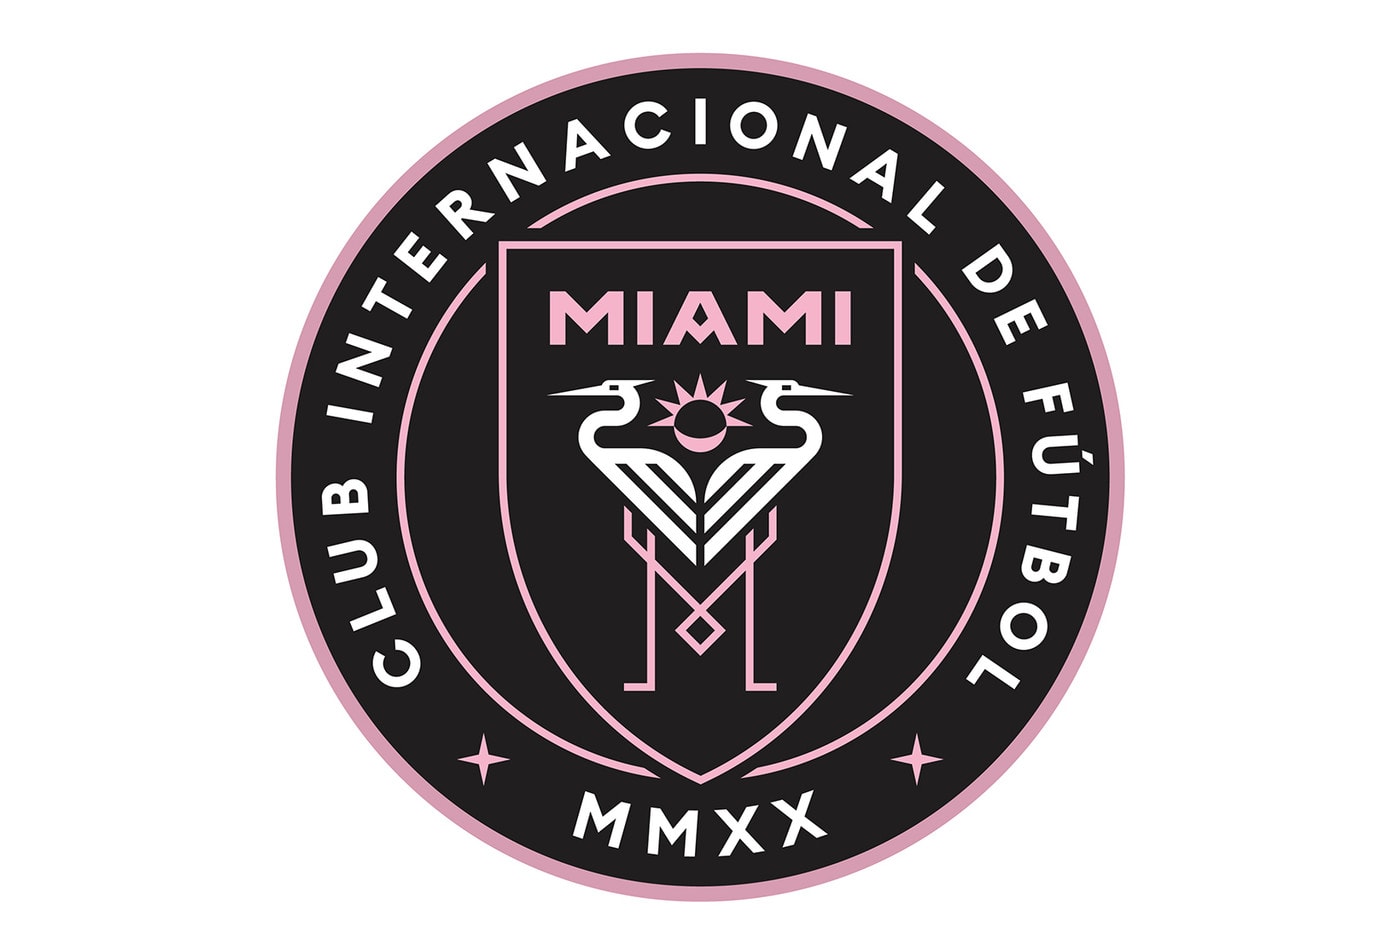 Miami David Beckham MLS Club Internacional de Fútbol Miami League Expansion Soccer Crest Football Crest Major League Soccer HYPEBEAST